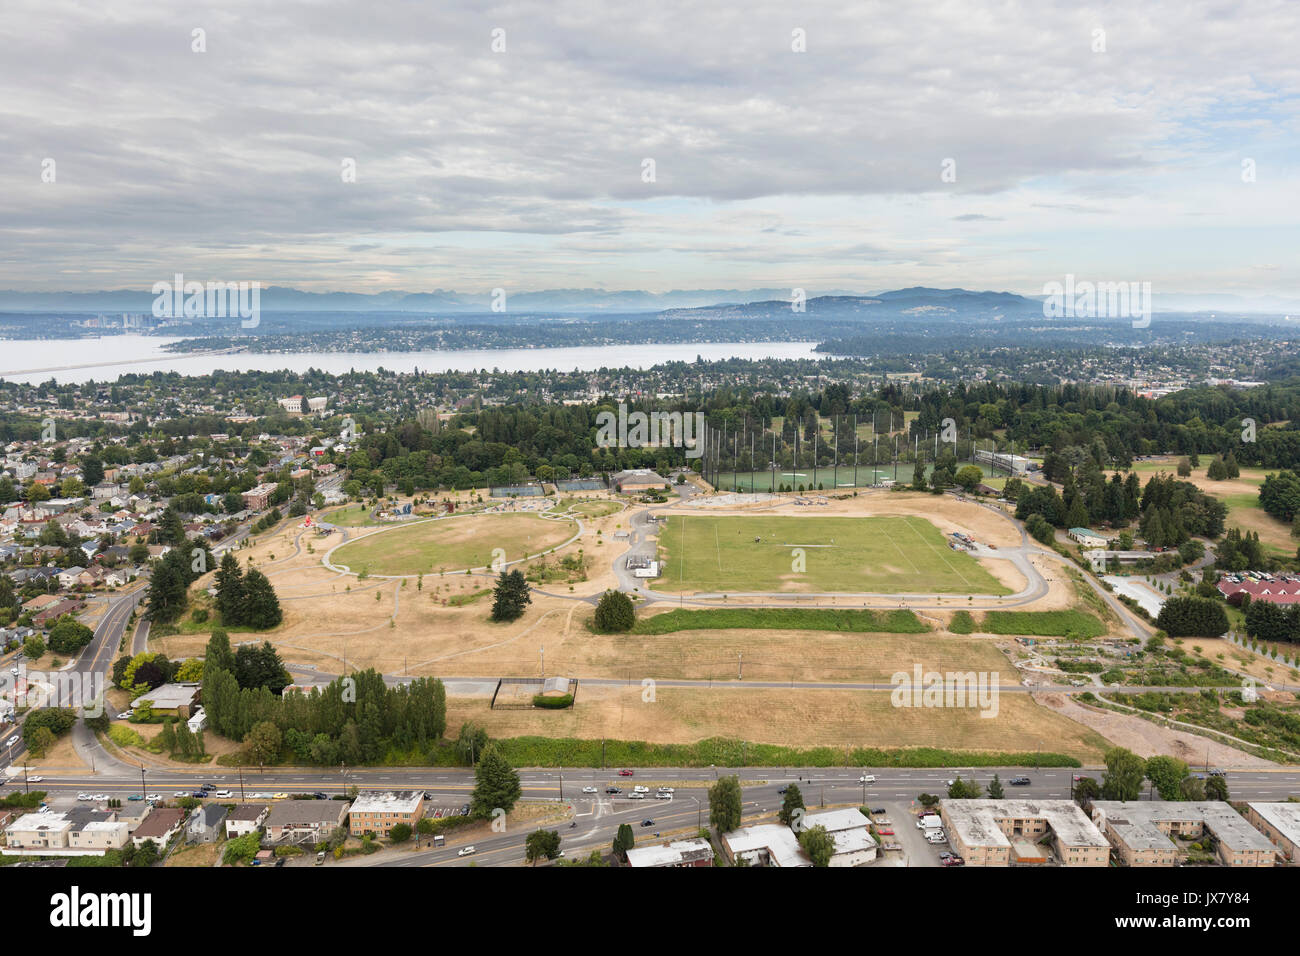 Jefferson Park instalaciones deportivas incluyendo Kilikiti Cricket Pitch, Beacon Hill, Seattle, WA, EE.UU. Foto de stock